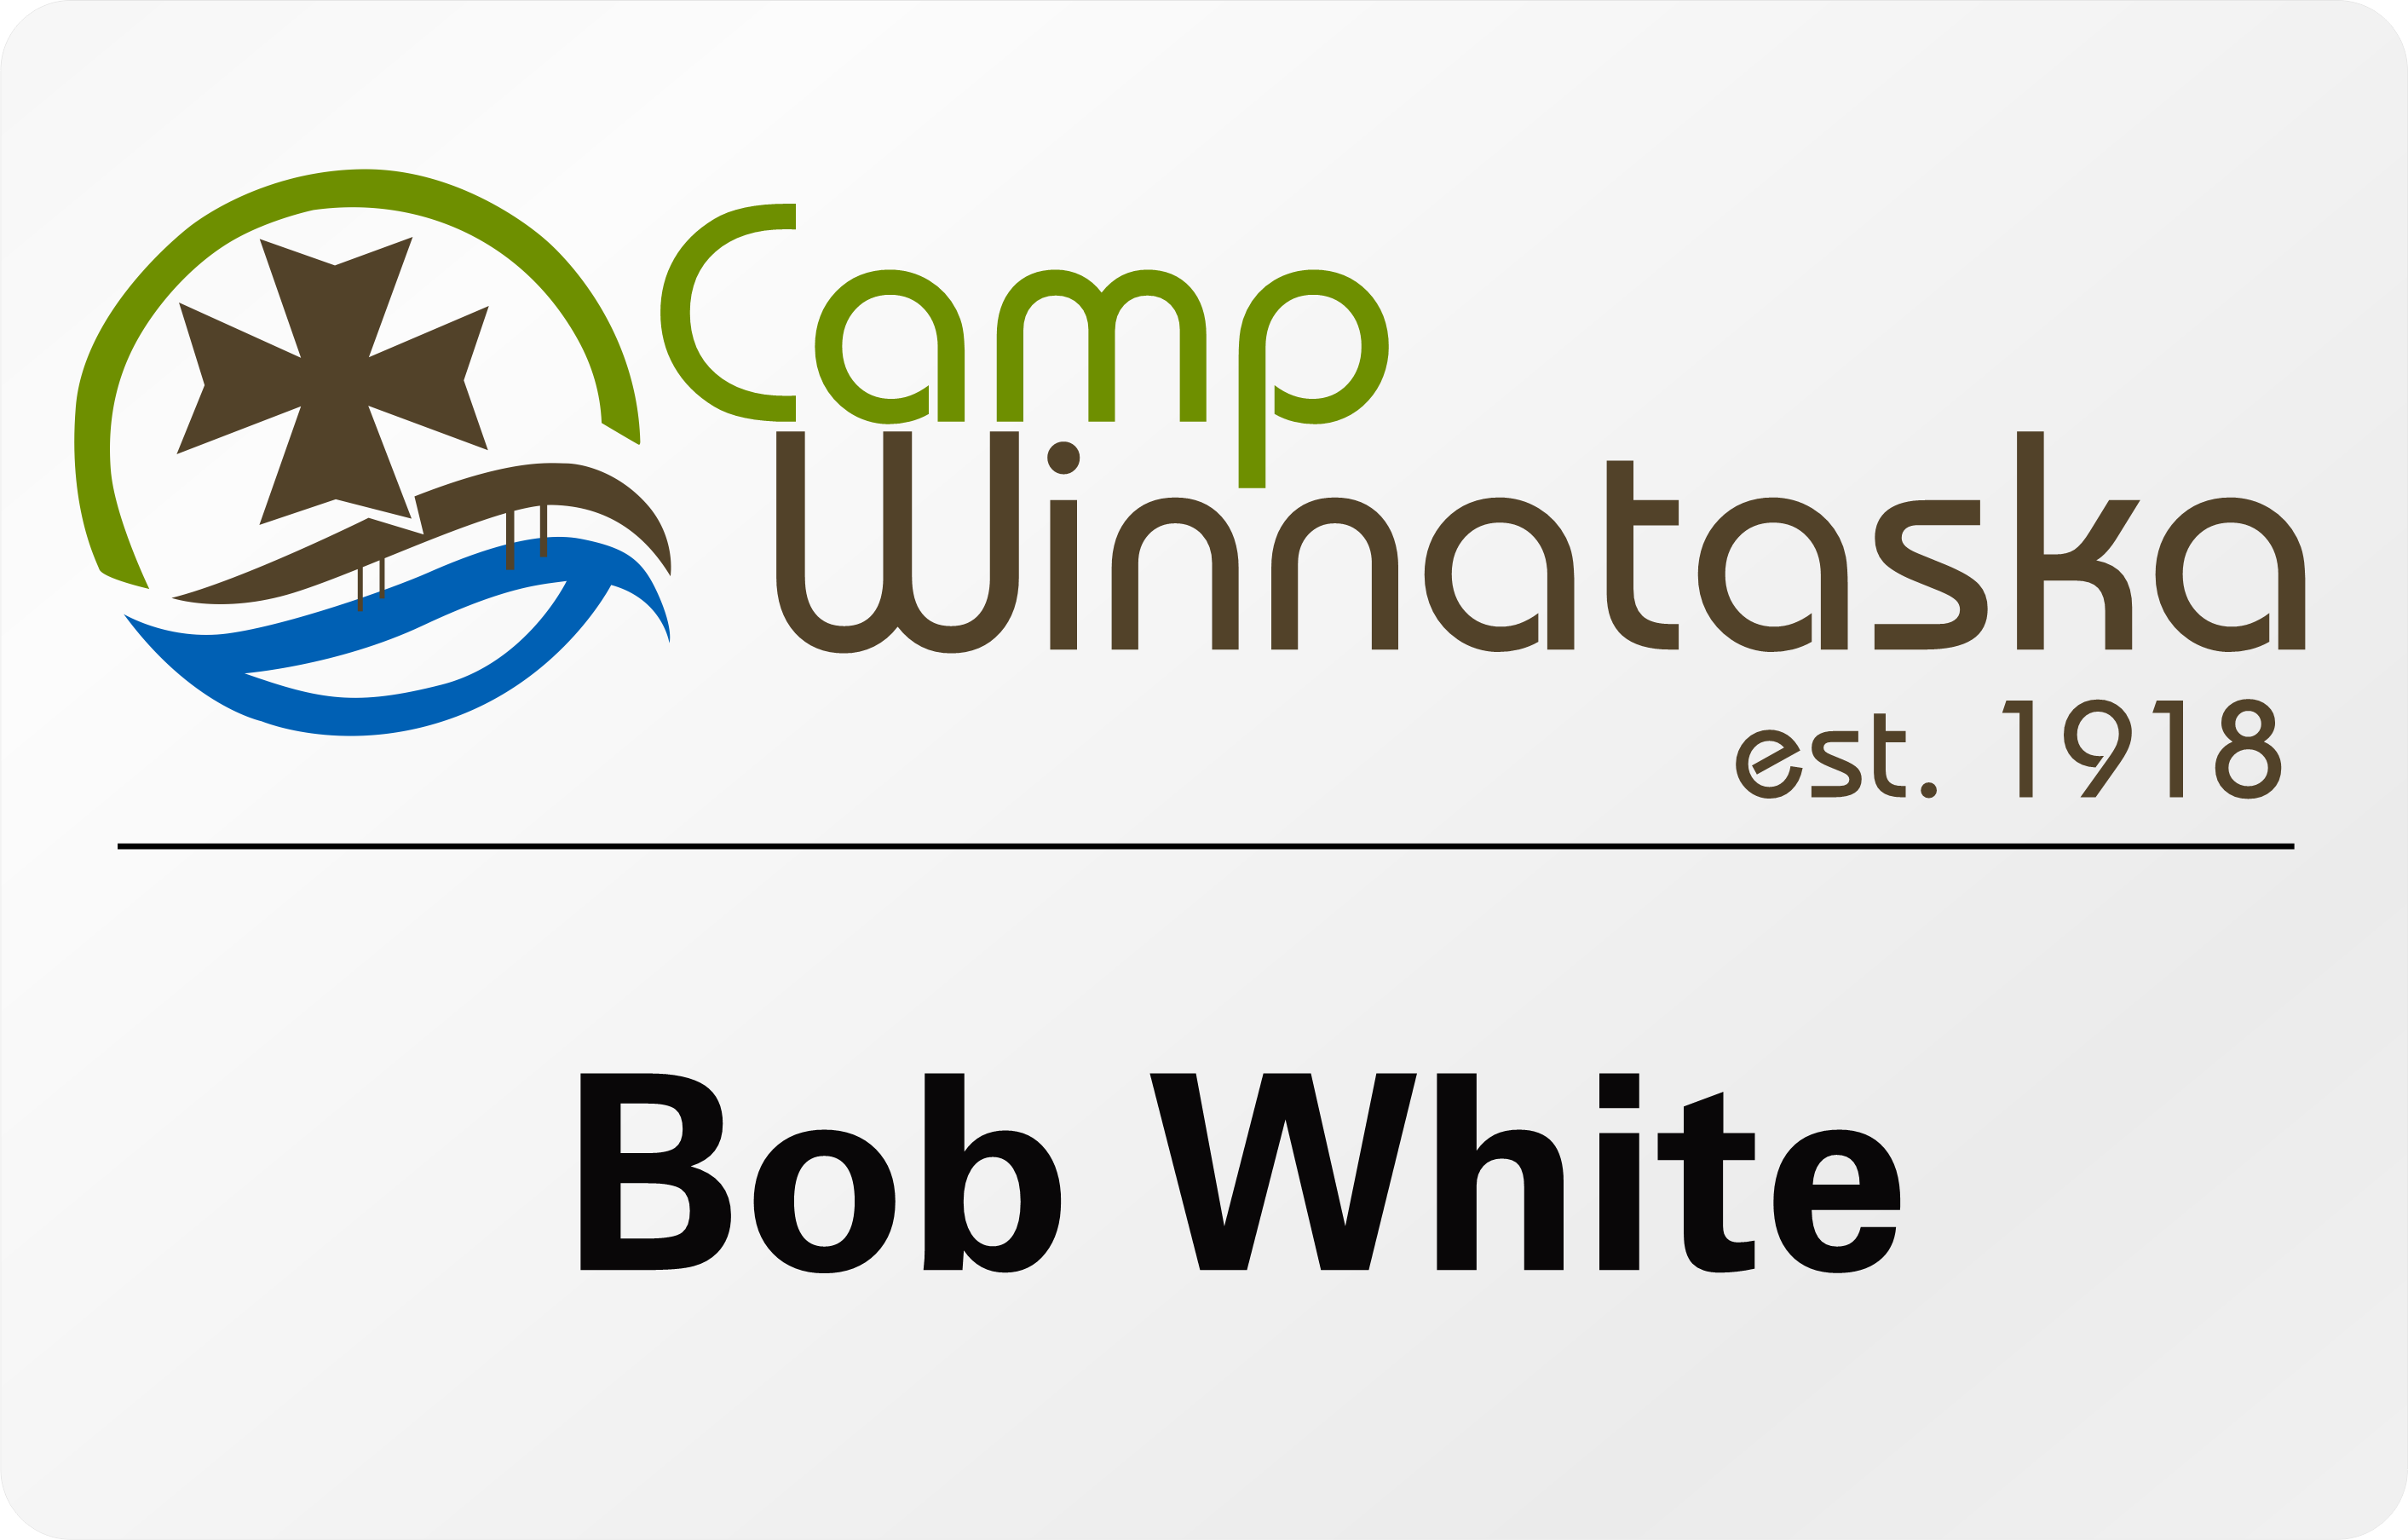 Name badge featuring logo for Camp Winnetaska